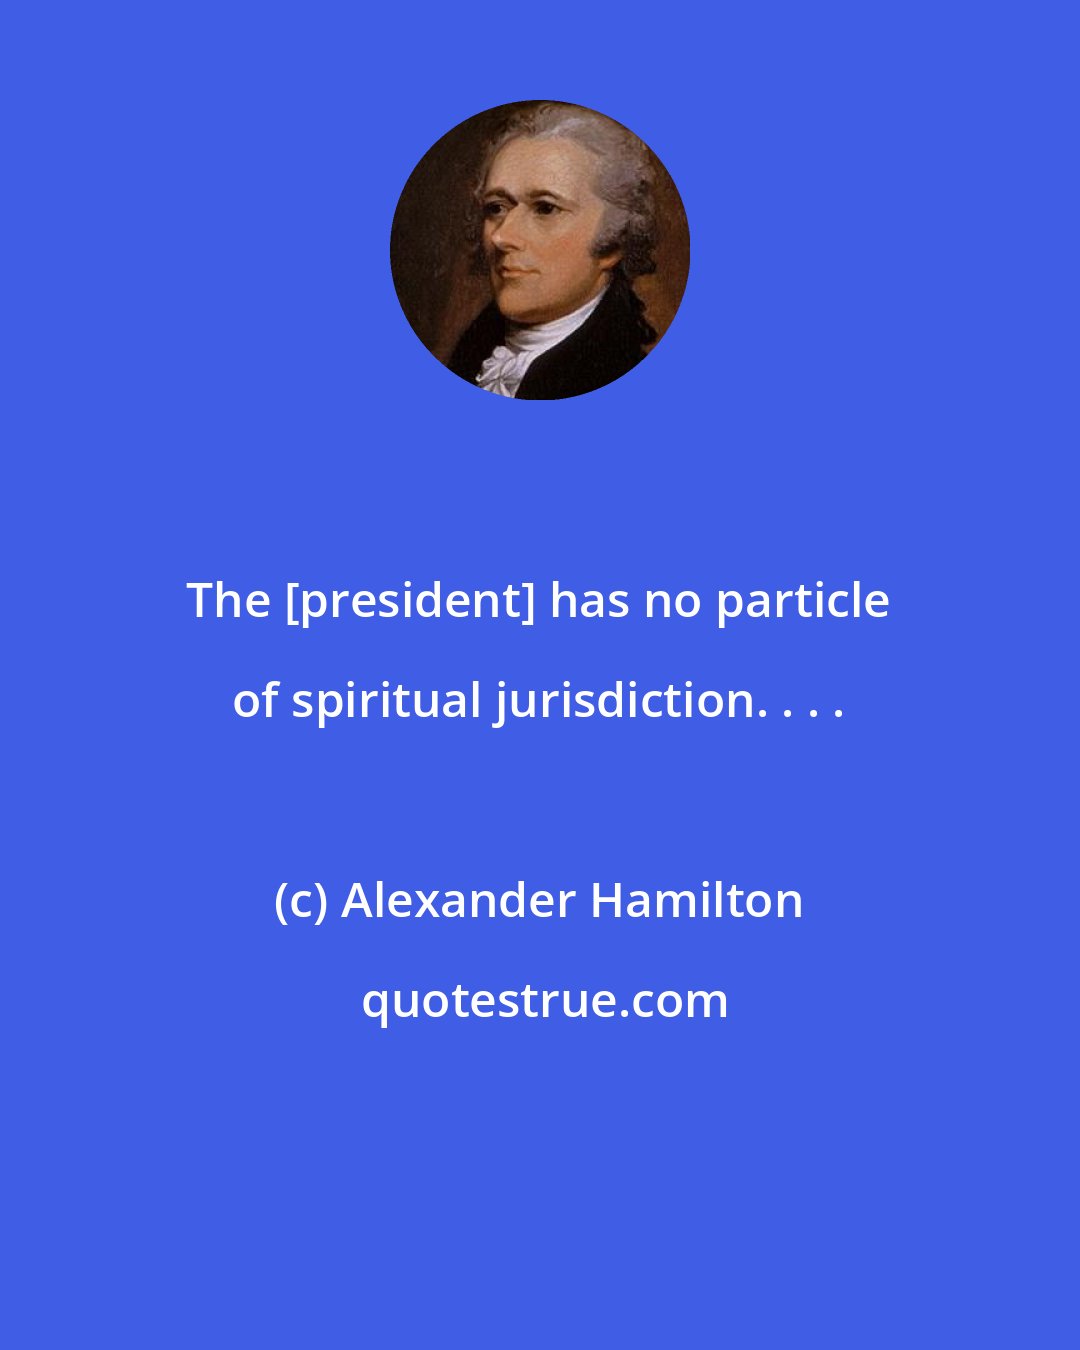 Alexander Hamilton: The [president] has no particle of spiritual jurisdiction. . . .